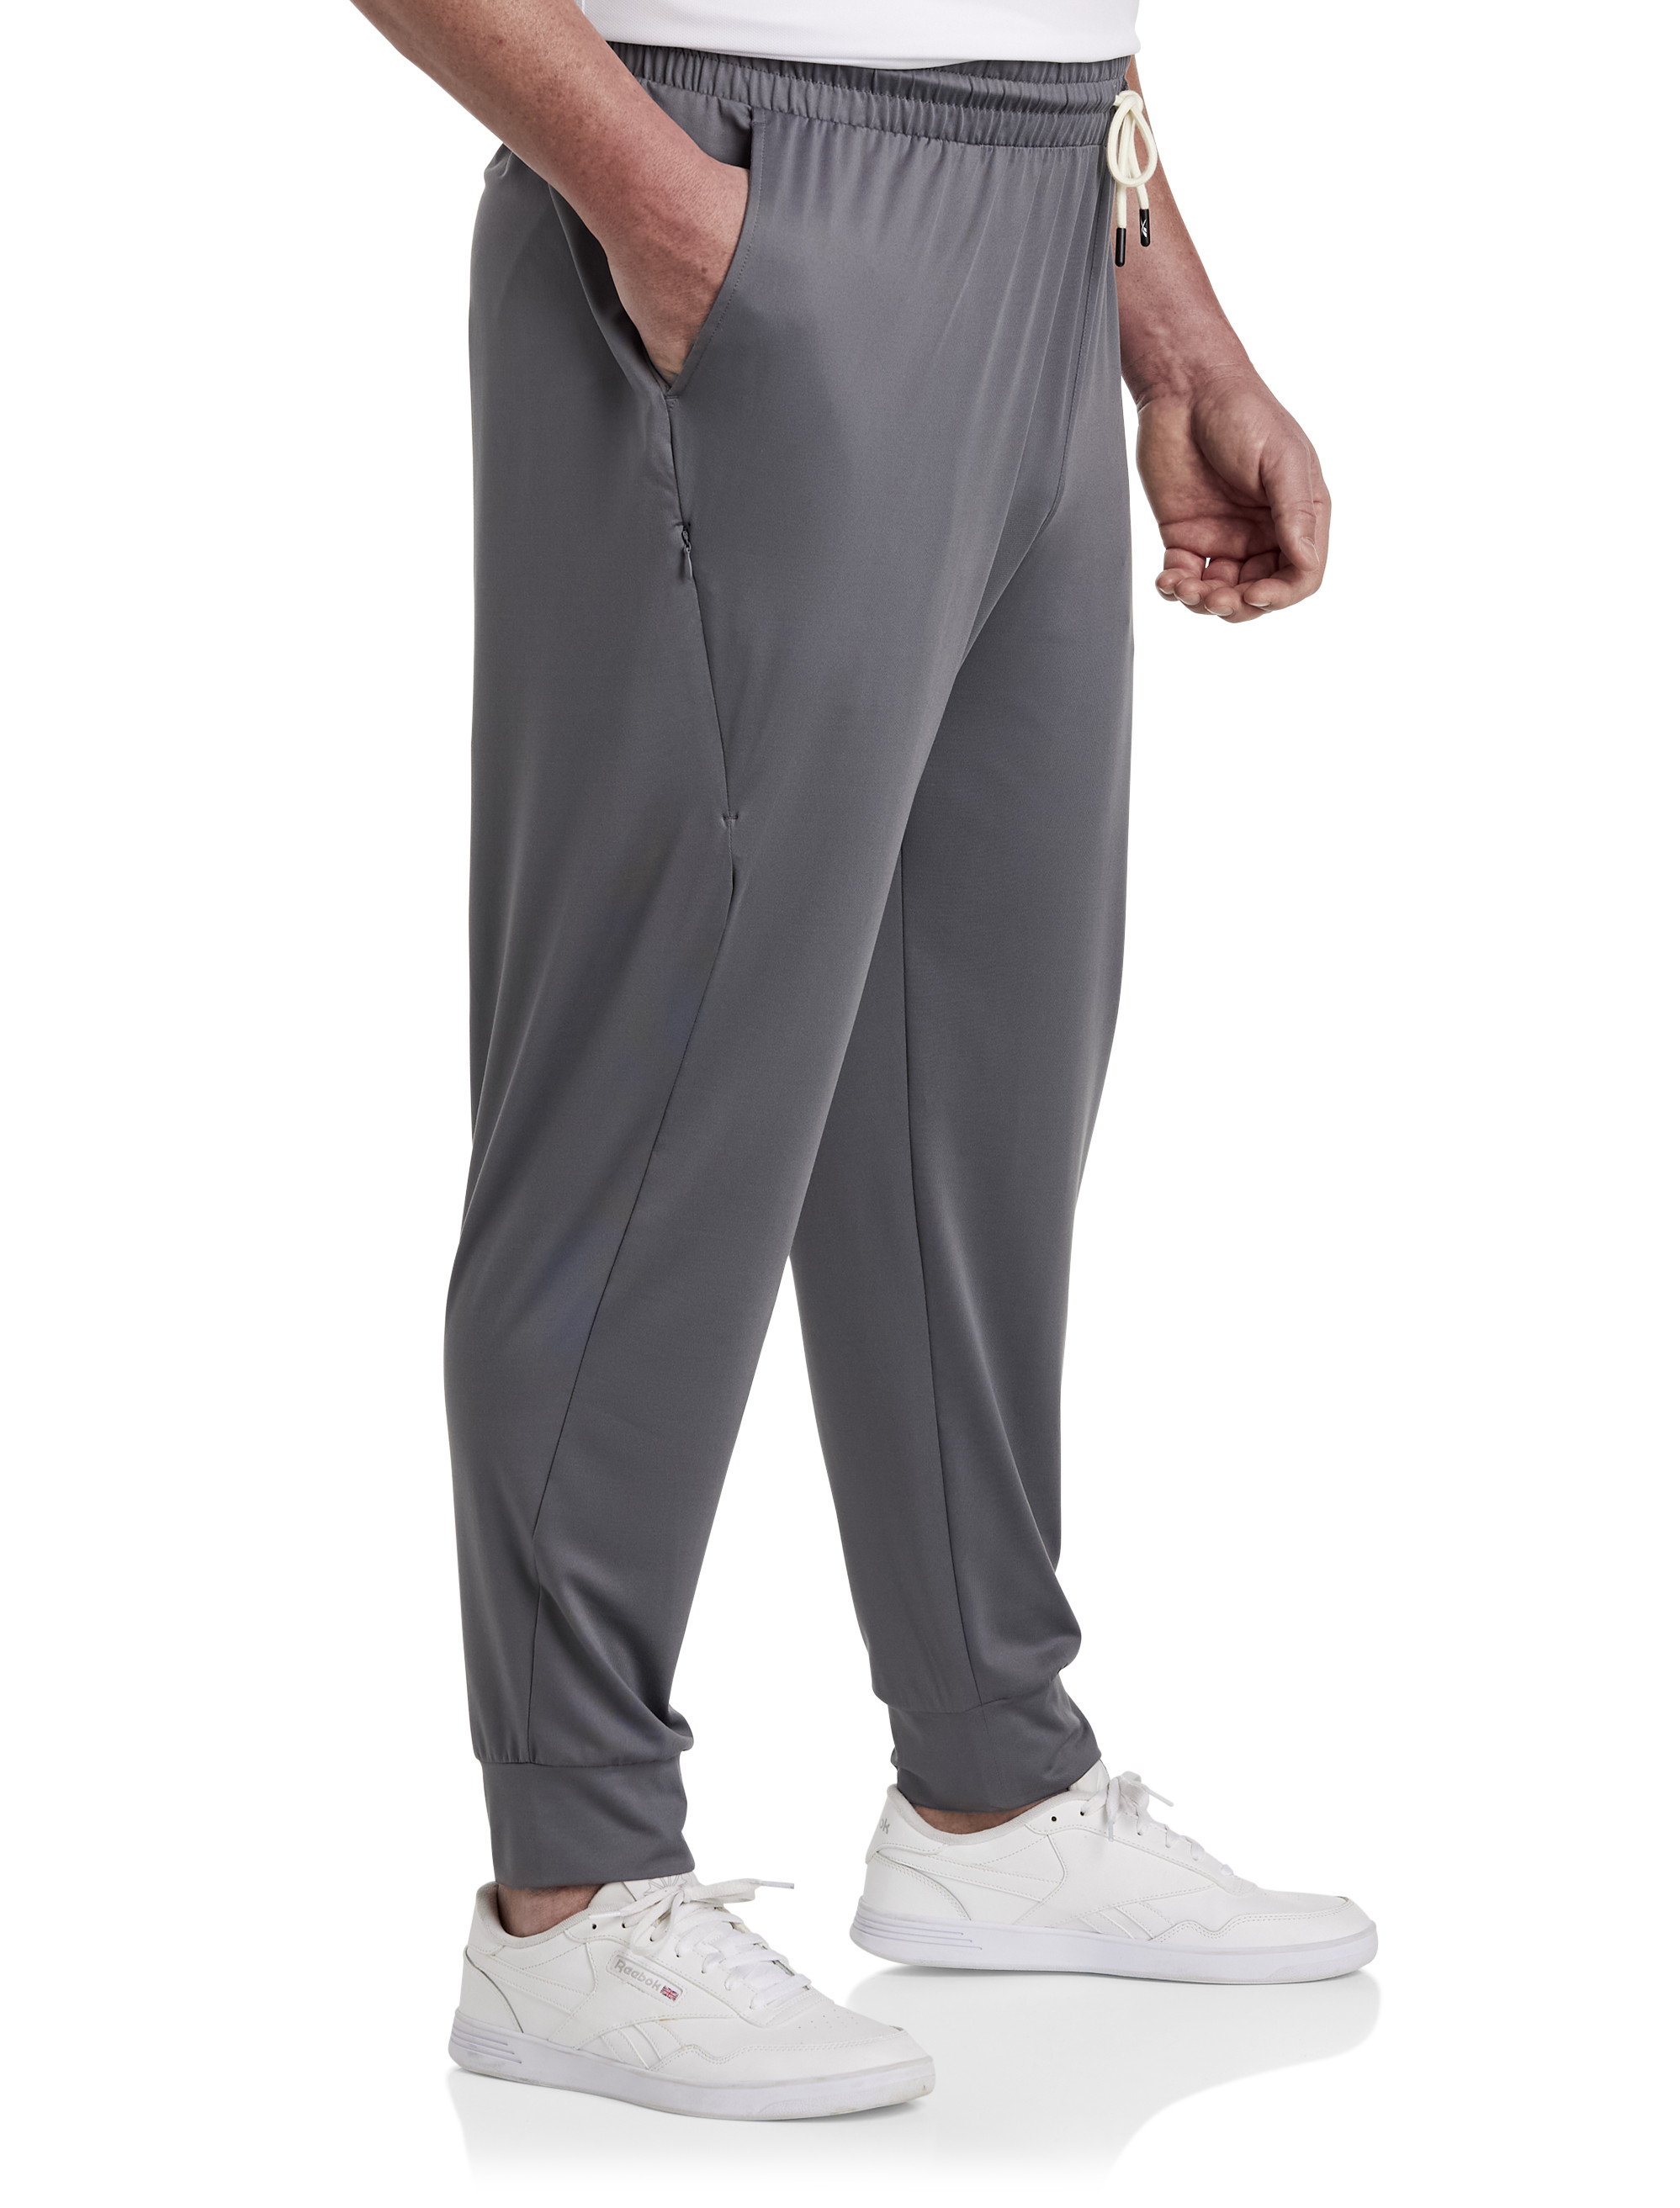 Nike NBA Authentics Dri-Fit Compression Pants Men's White/Gray Used 2XLT